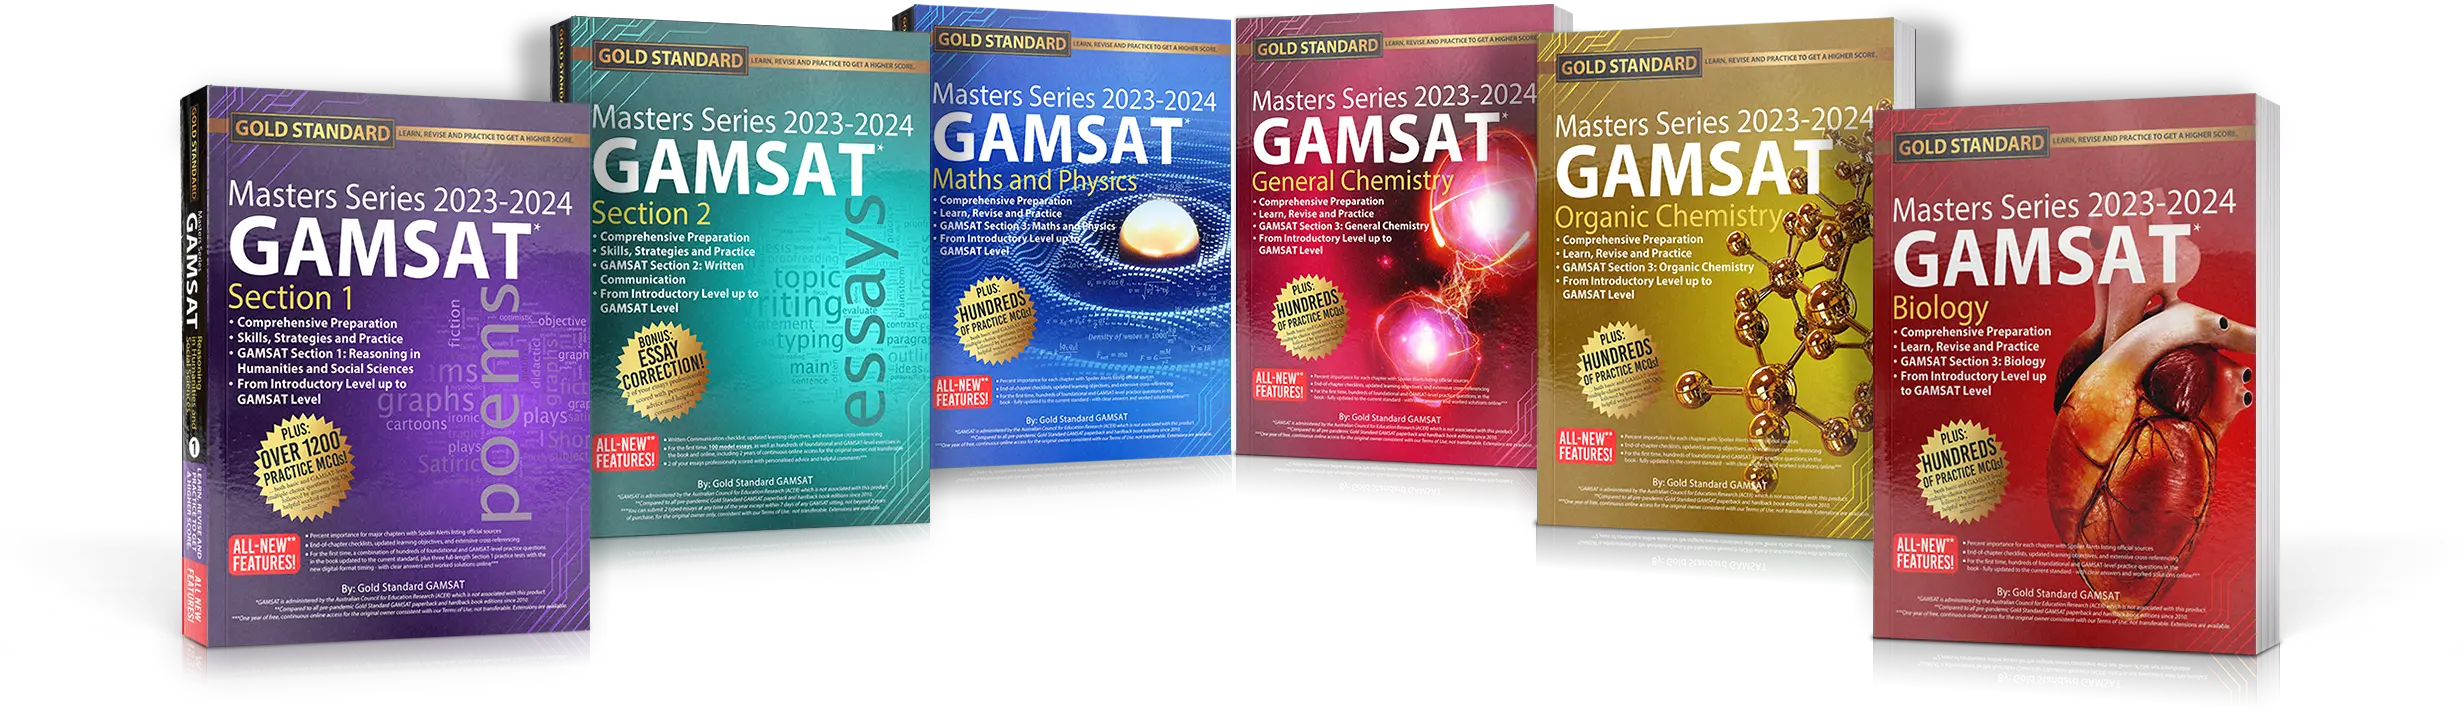 The 2021-2022 New Masters Series GAMSAT Books